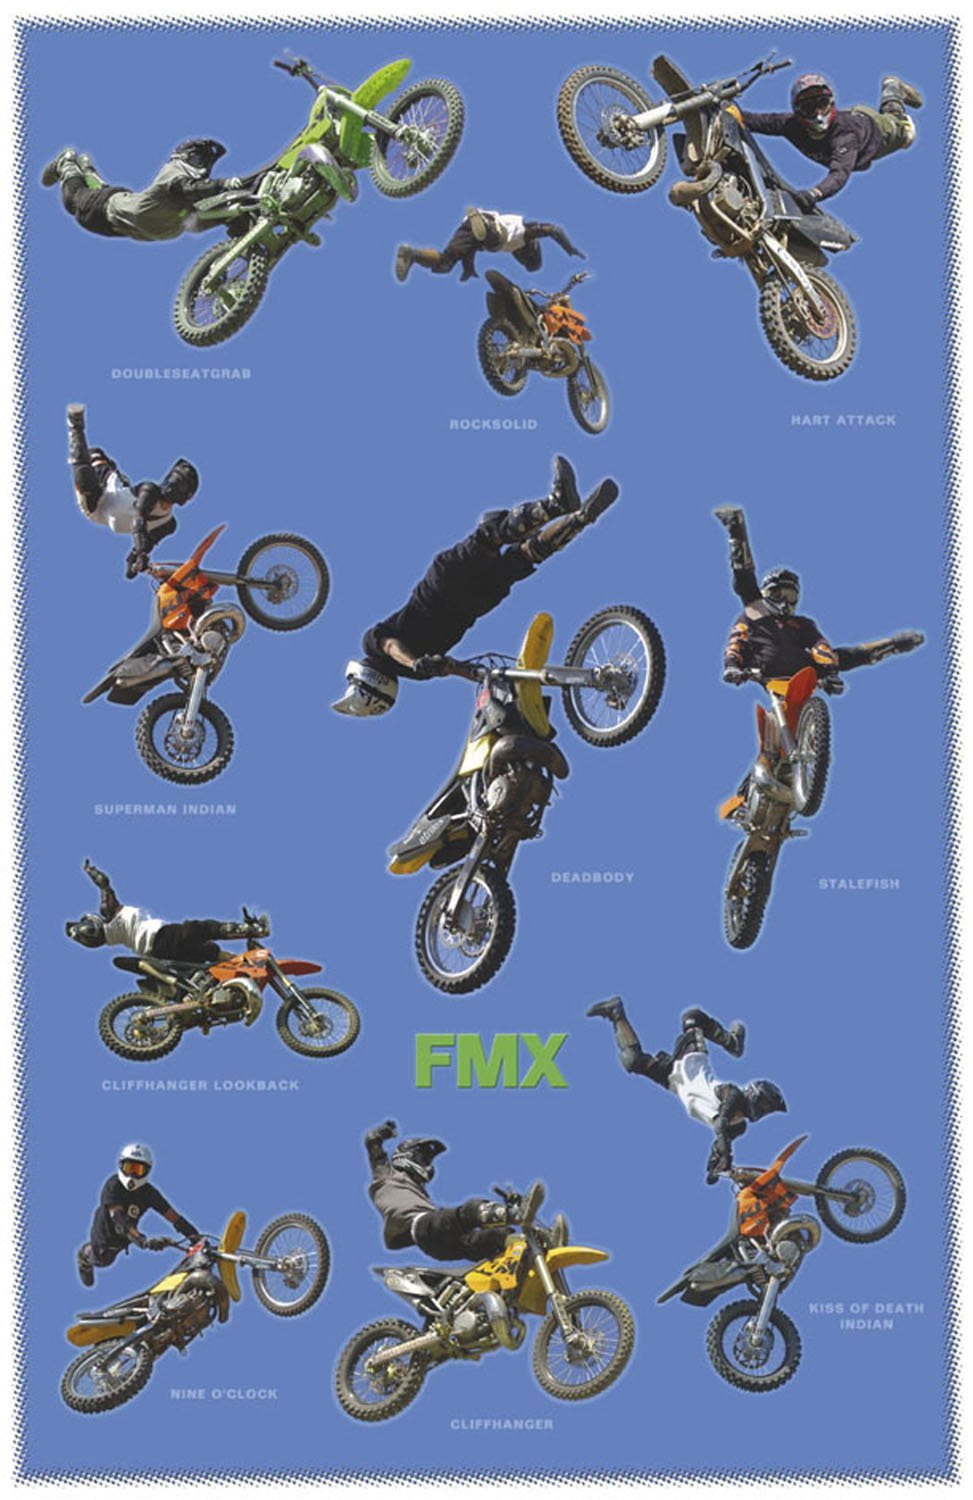 Studio B  Freestyle Motorcross Poster